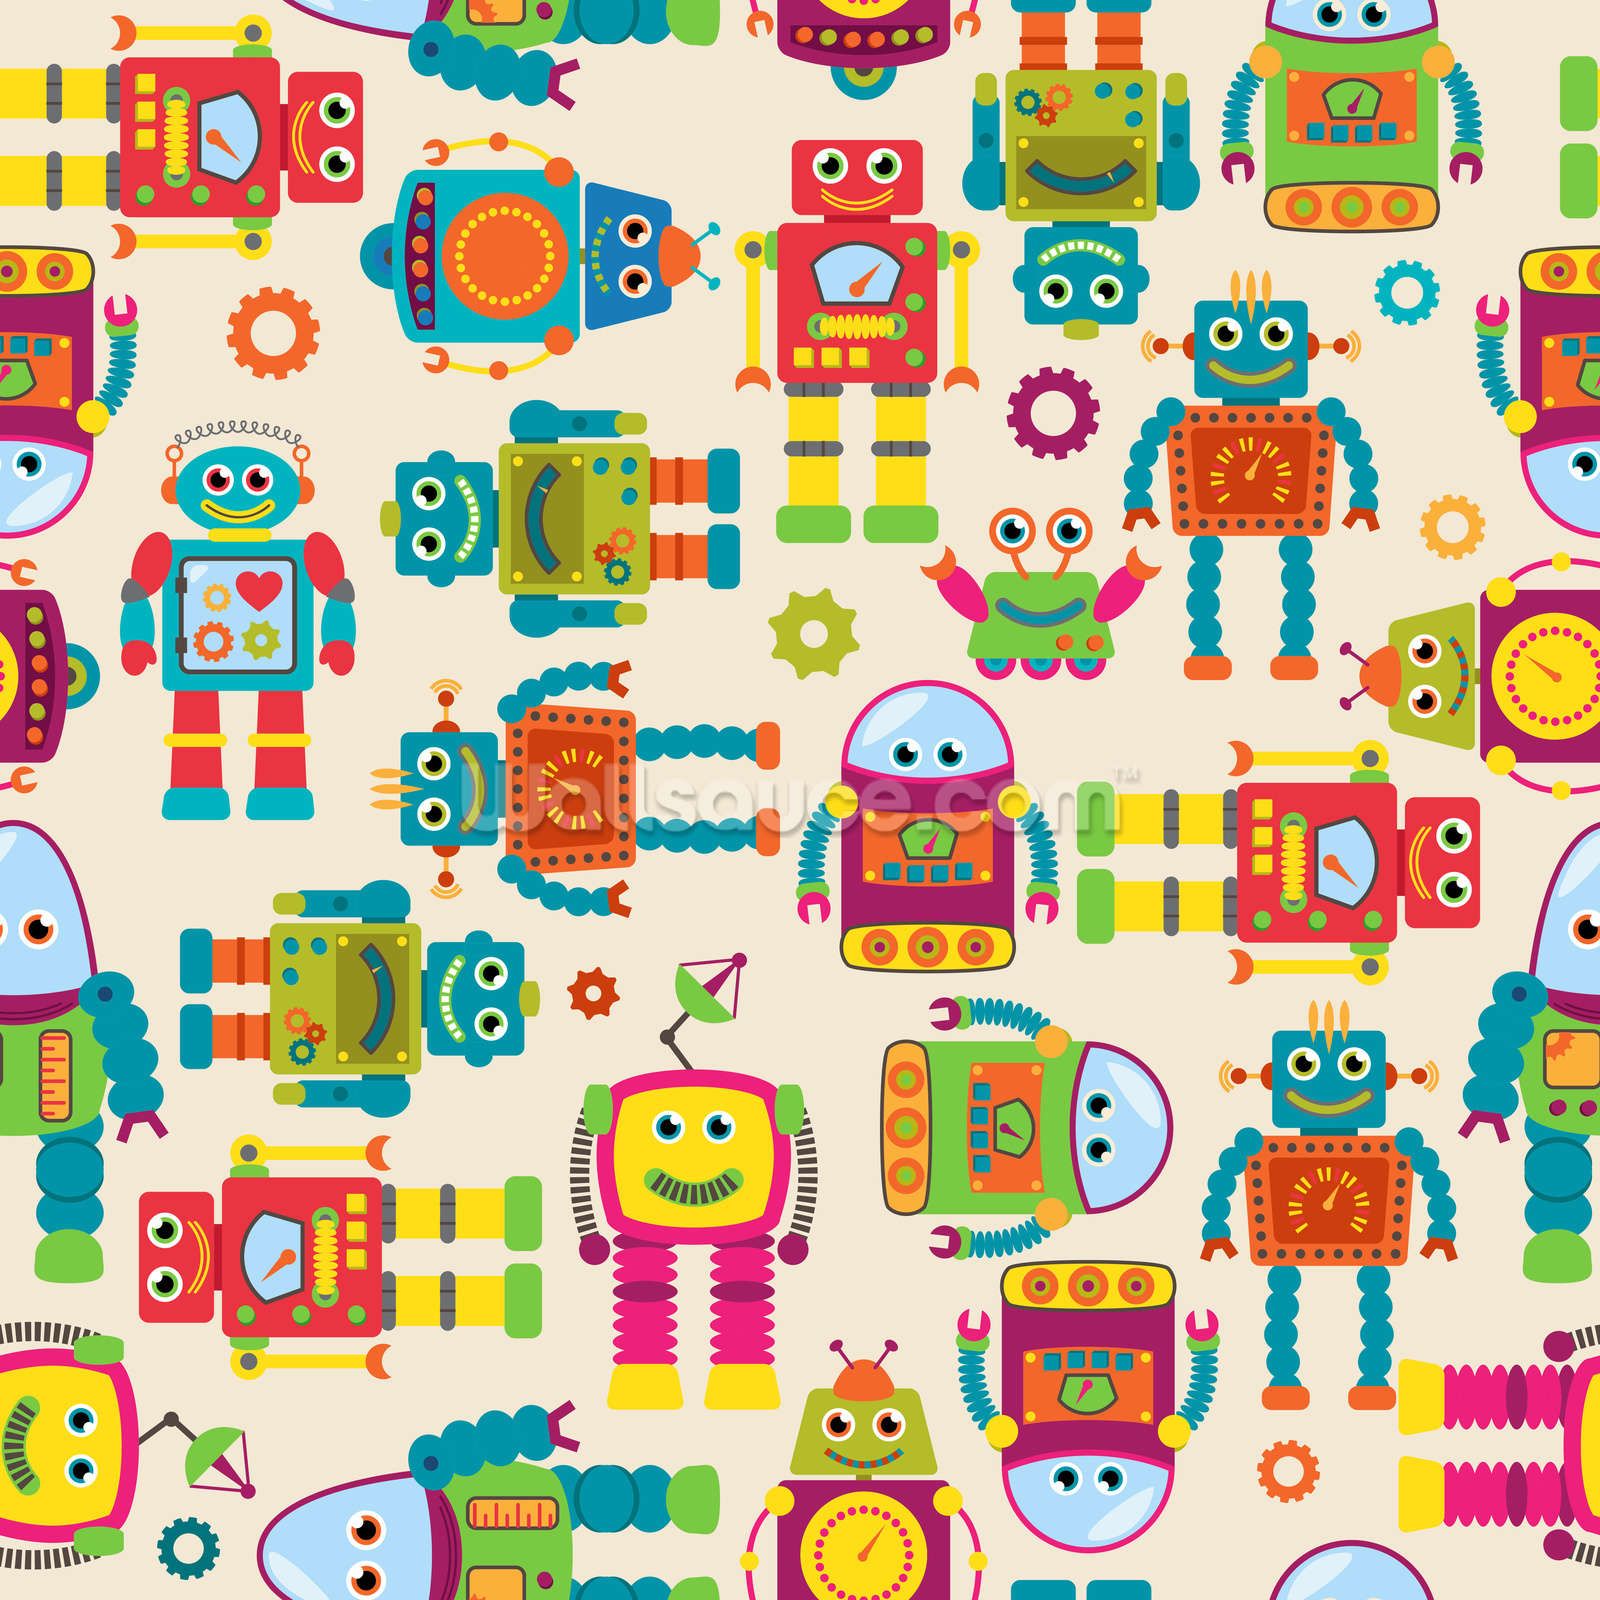 26+] Robots Background - WallpaperSafari